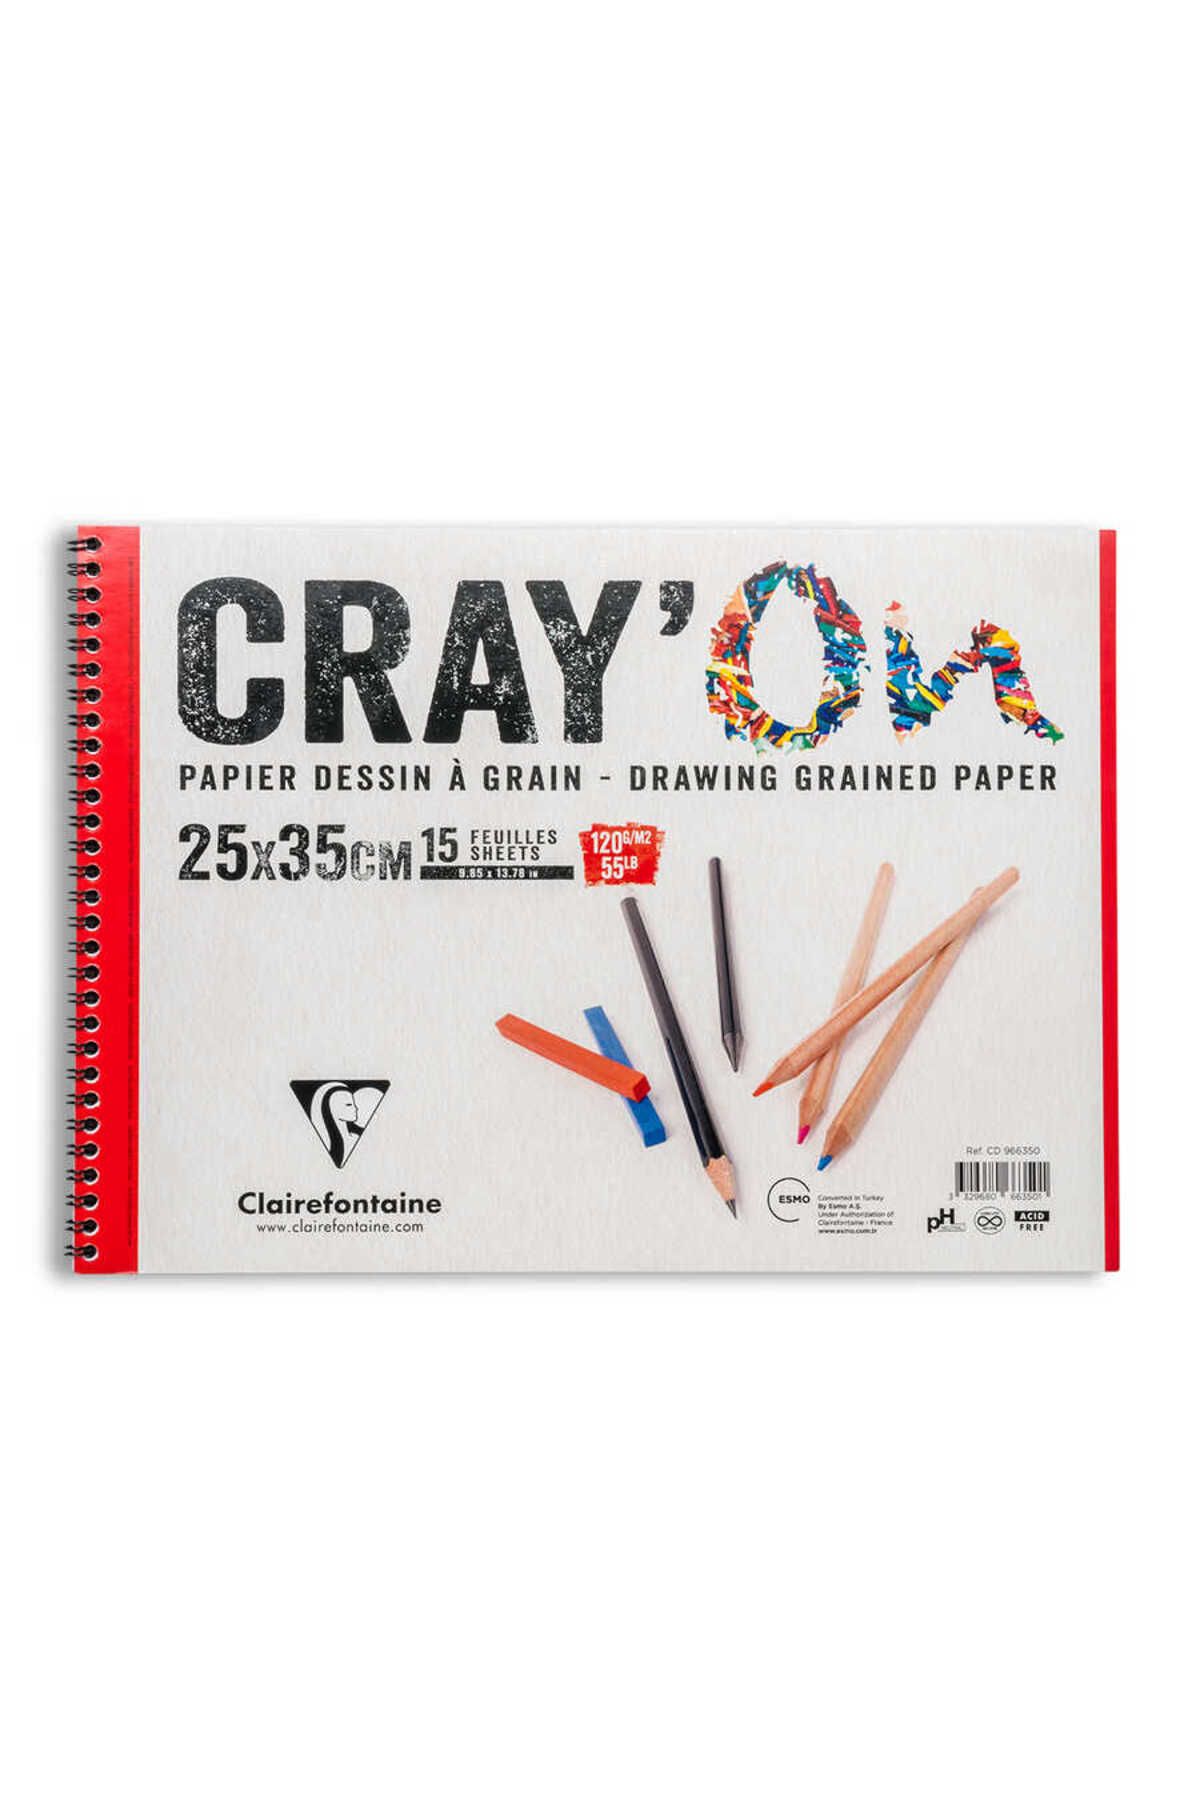 Clairefontaine Cray-on Çizim Bloğu 25x35cm 120gr 15 Yaprak